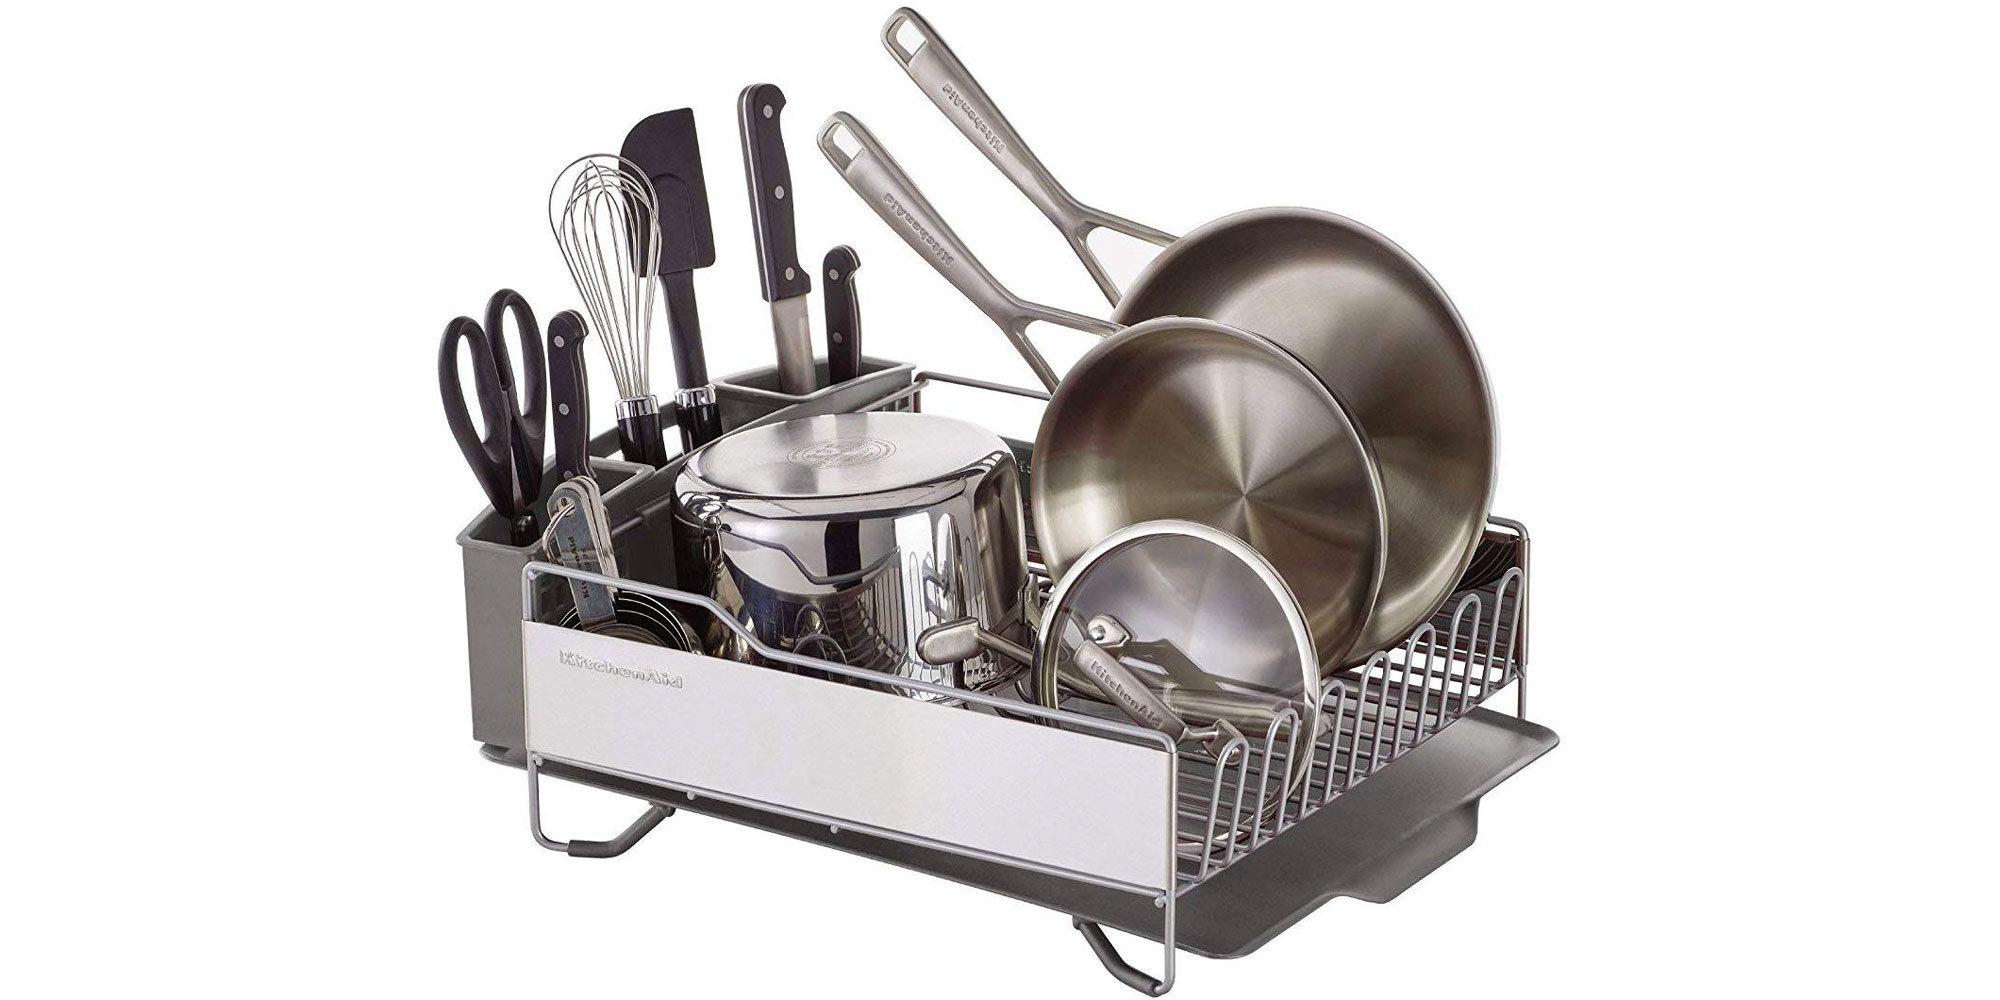 KitchenAid's modern dish rack is a kitchen must at $46 (Reg. $60)